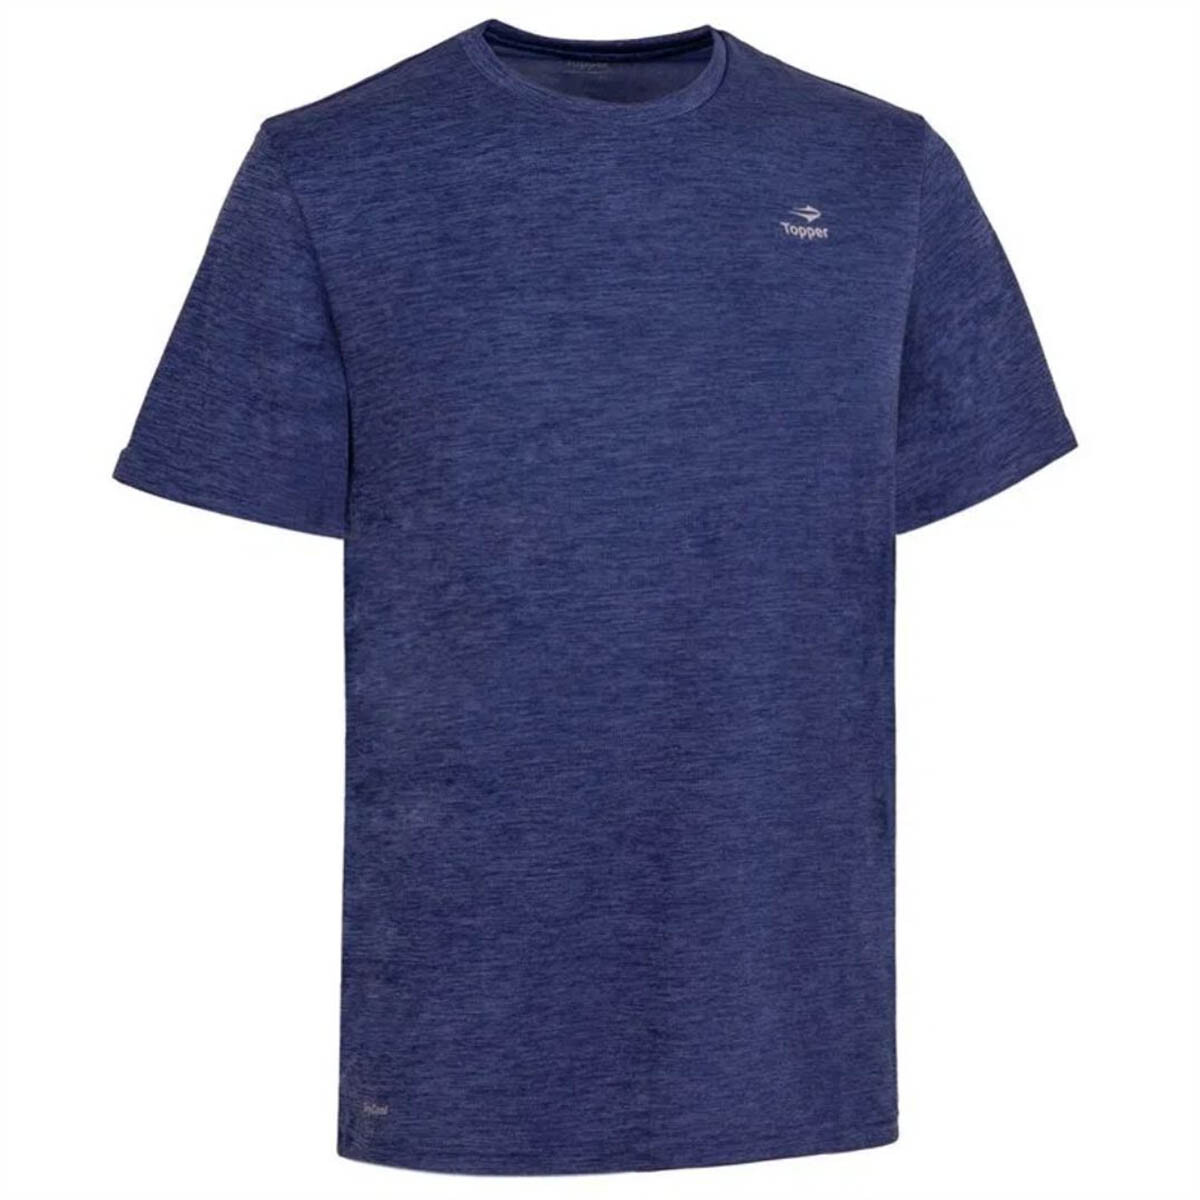 Remera Camiseta Topper Básica Deportiva Para Hombre - Azul 